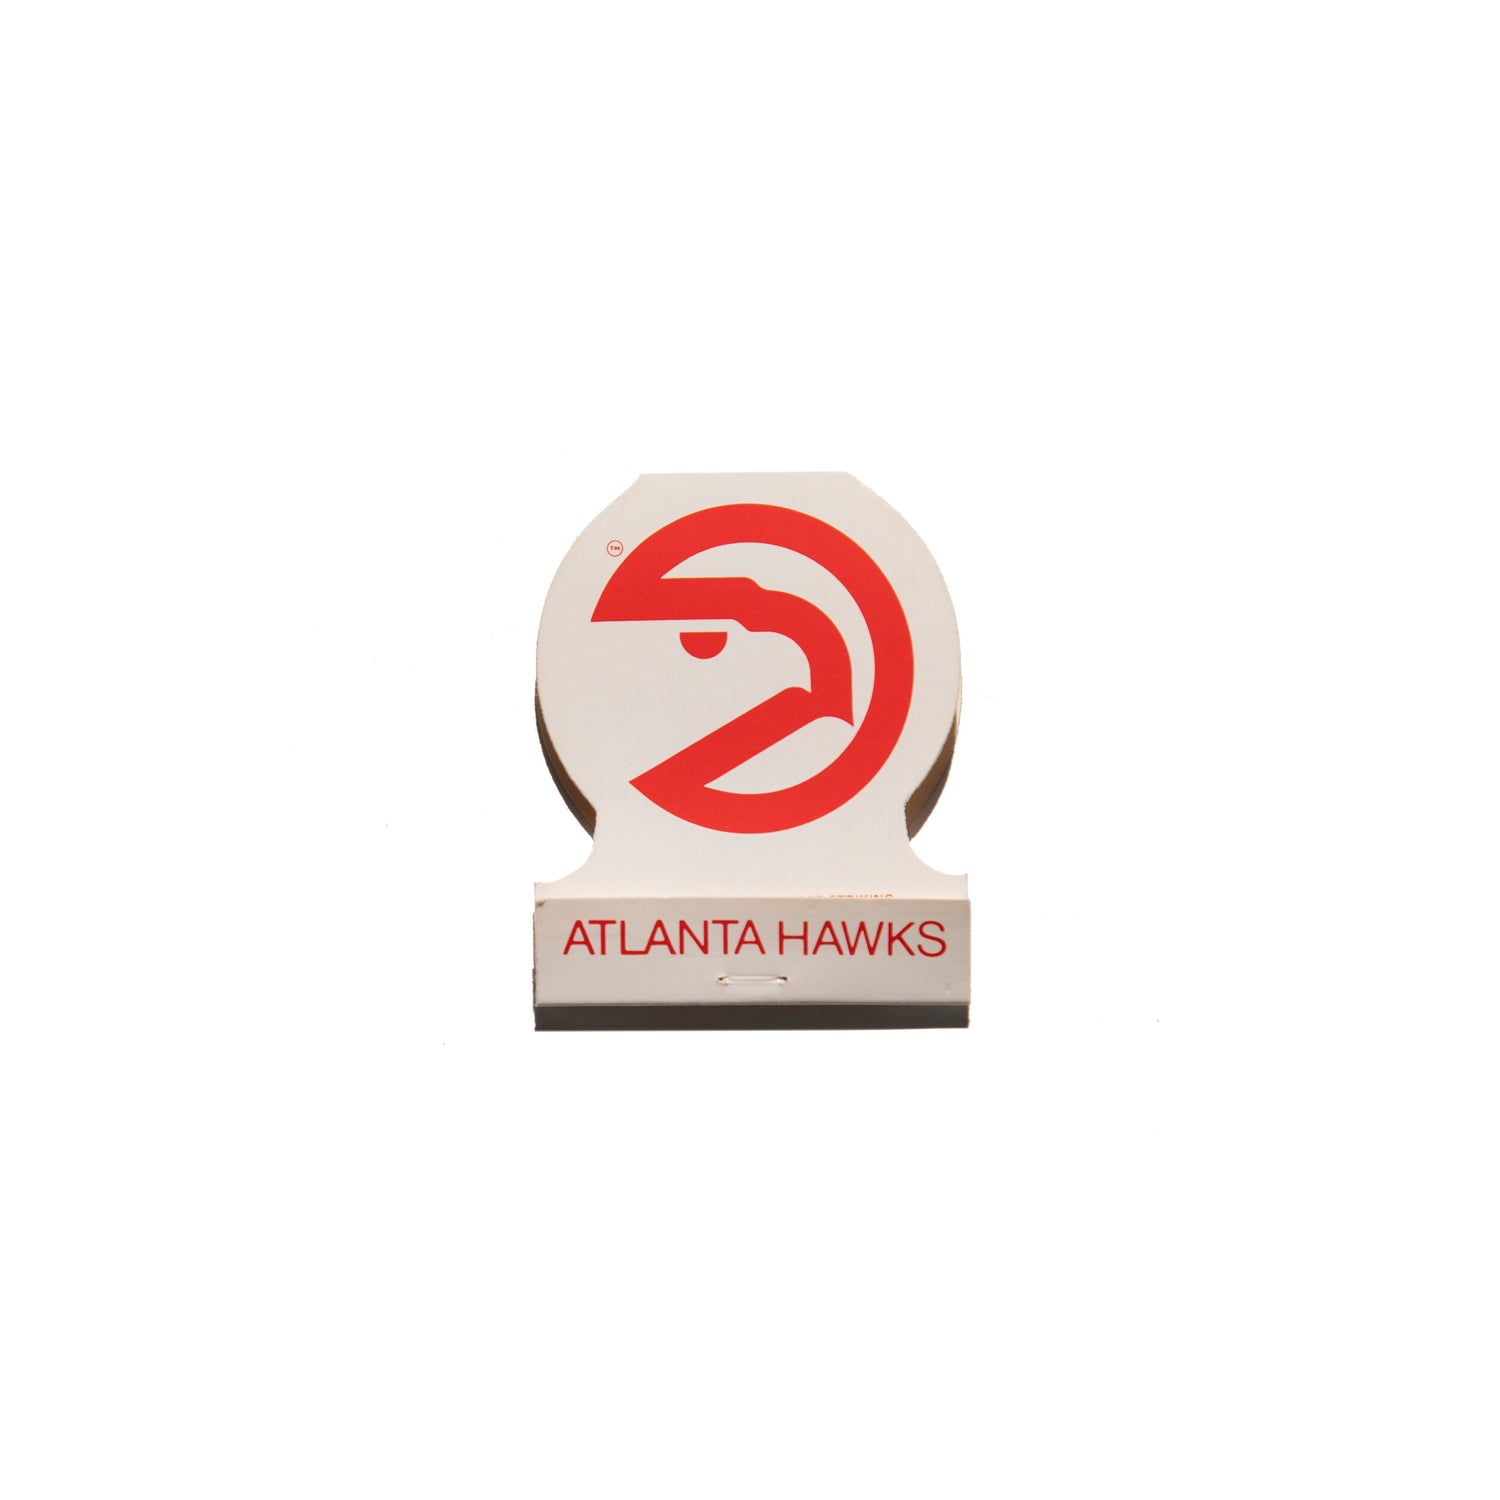 Atlanta Hawks – Match South Shop